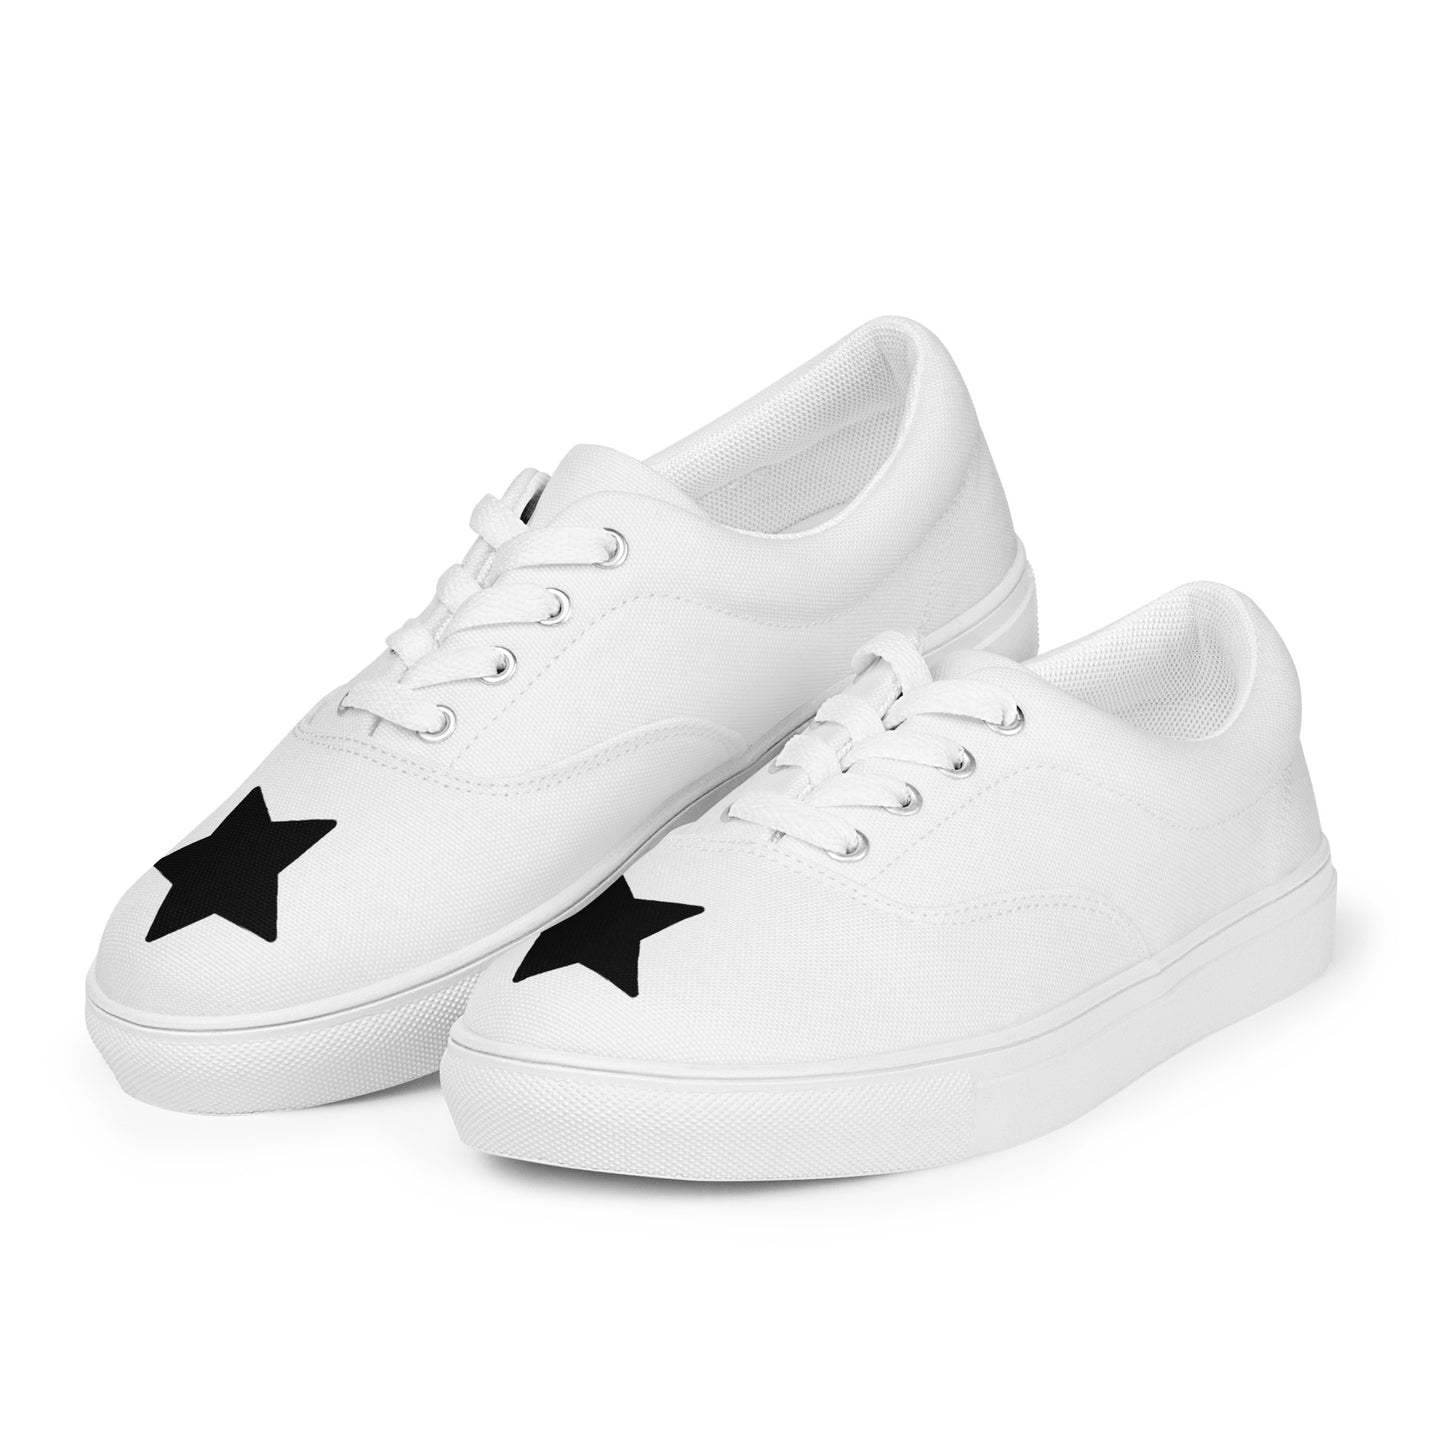 Women’s Black Star White Lace-up Canvas Shoes